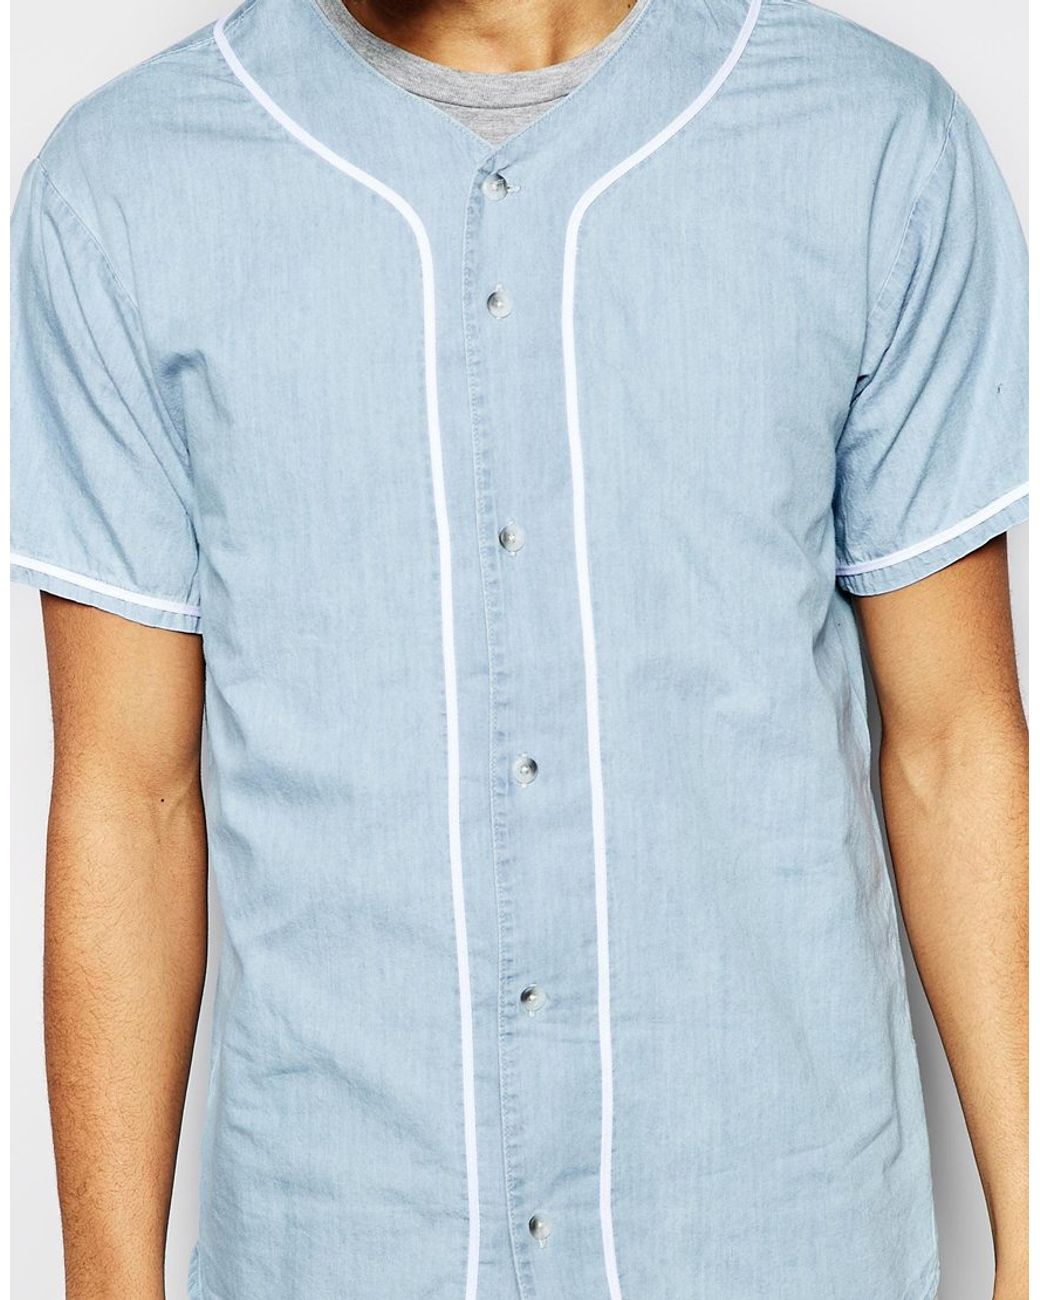 American Apparel Denim Baseball Shirt in Blue for Men